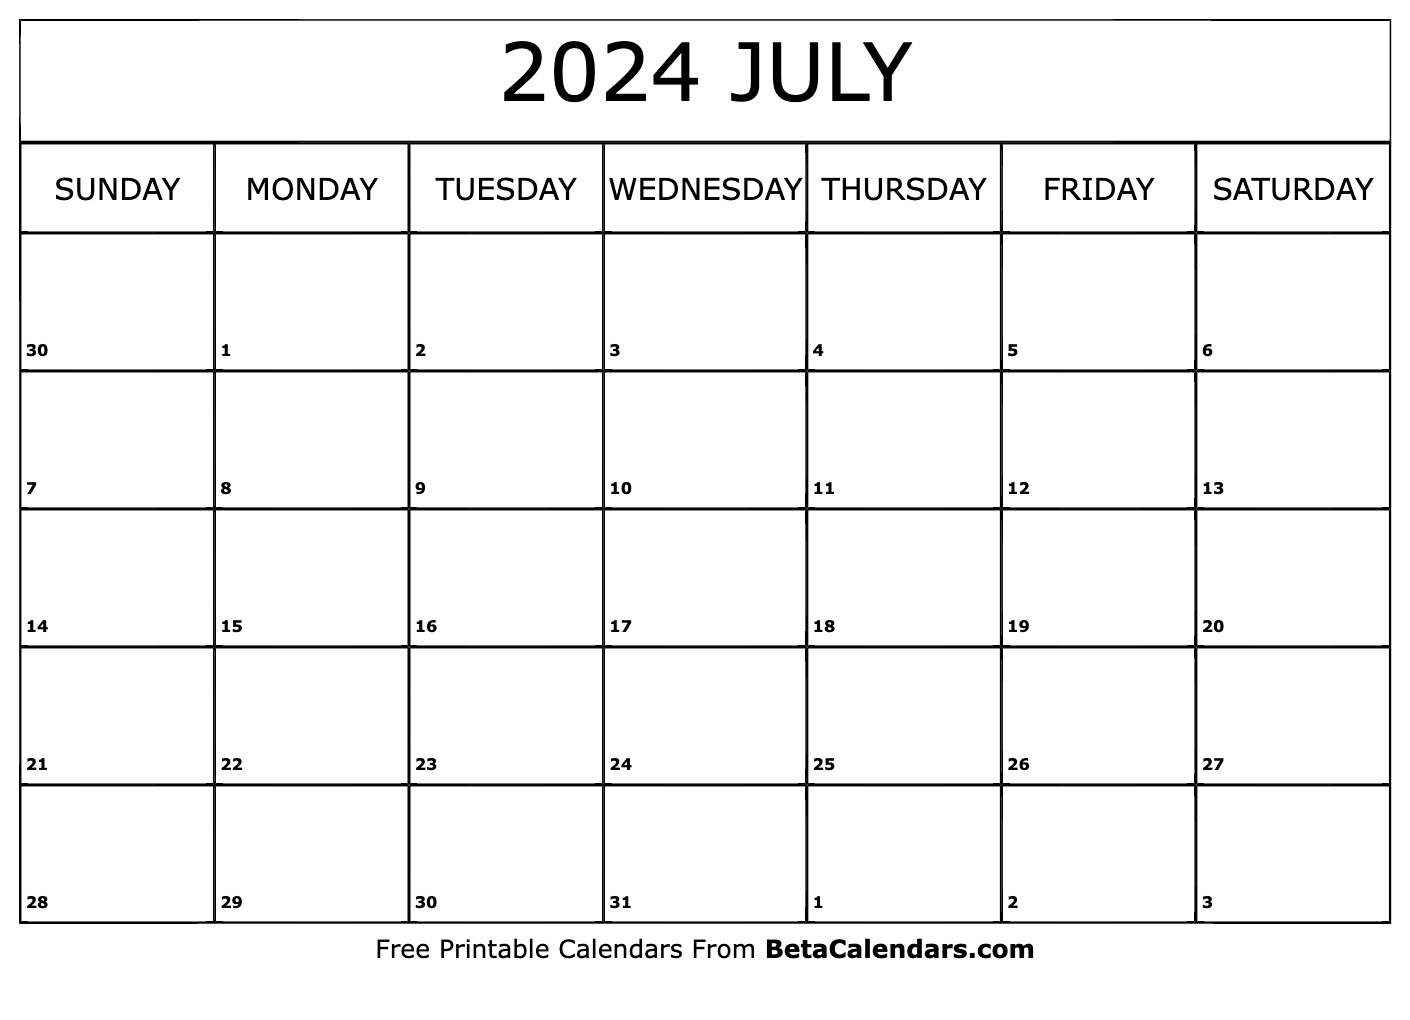 Free Printable July 2024 Calendar within Free Printable Calendar 2024 July August